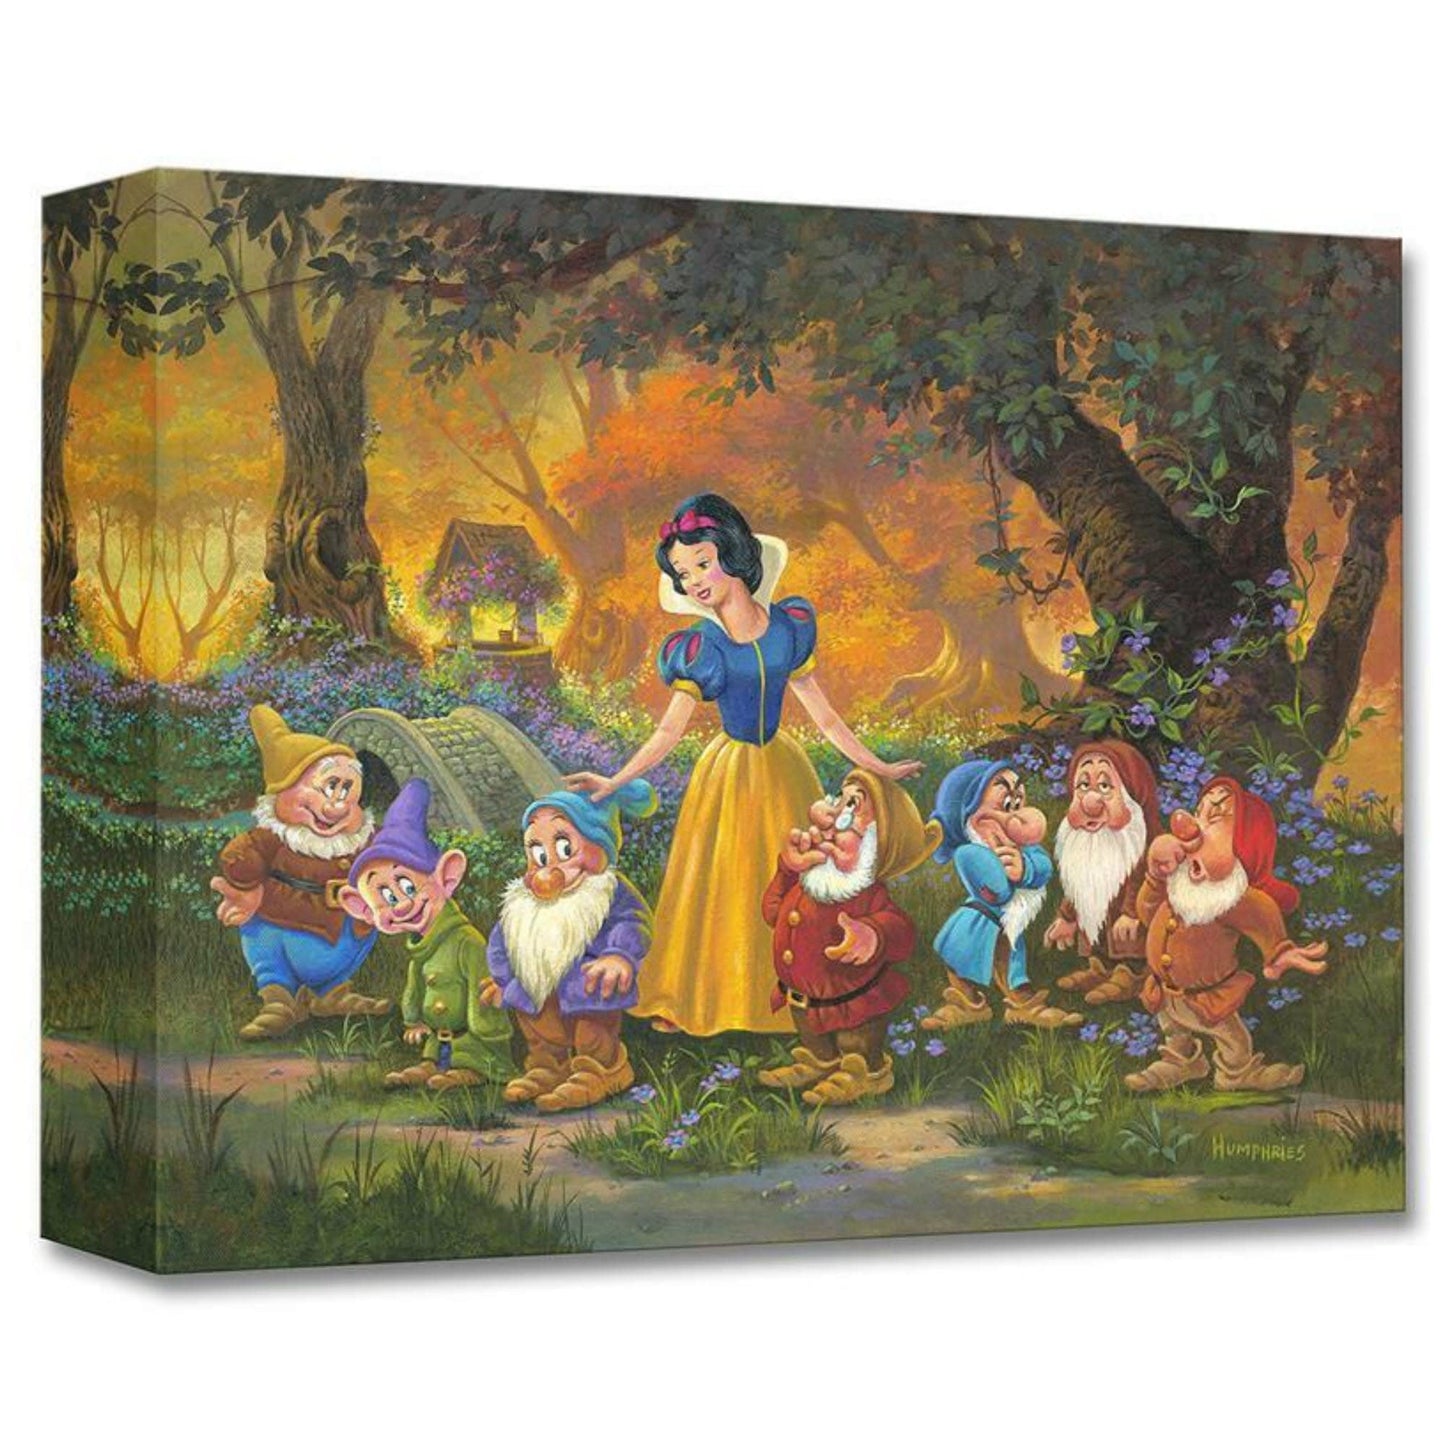 Among Friends - Disney Treasure On Canvas